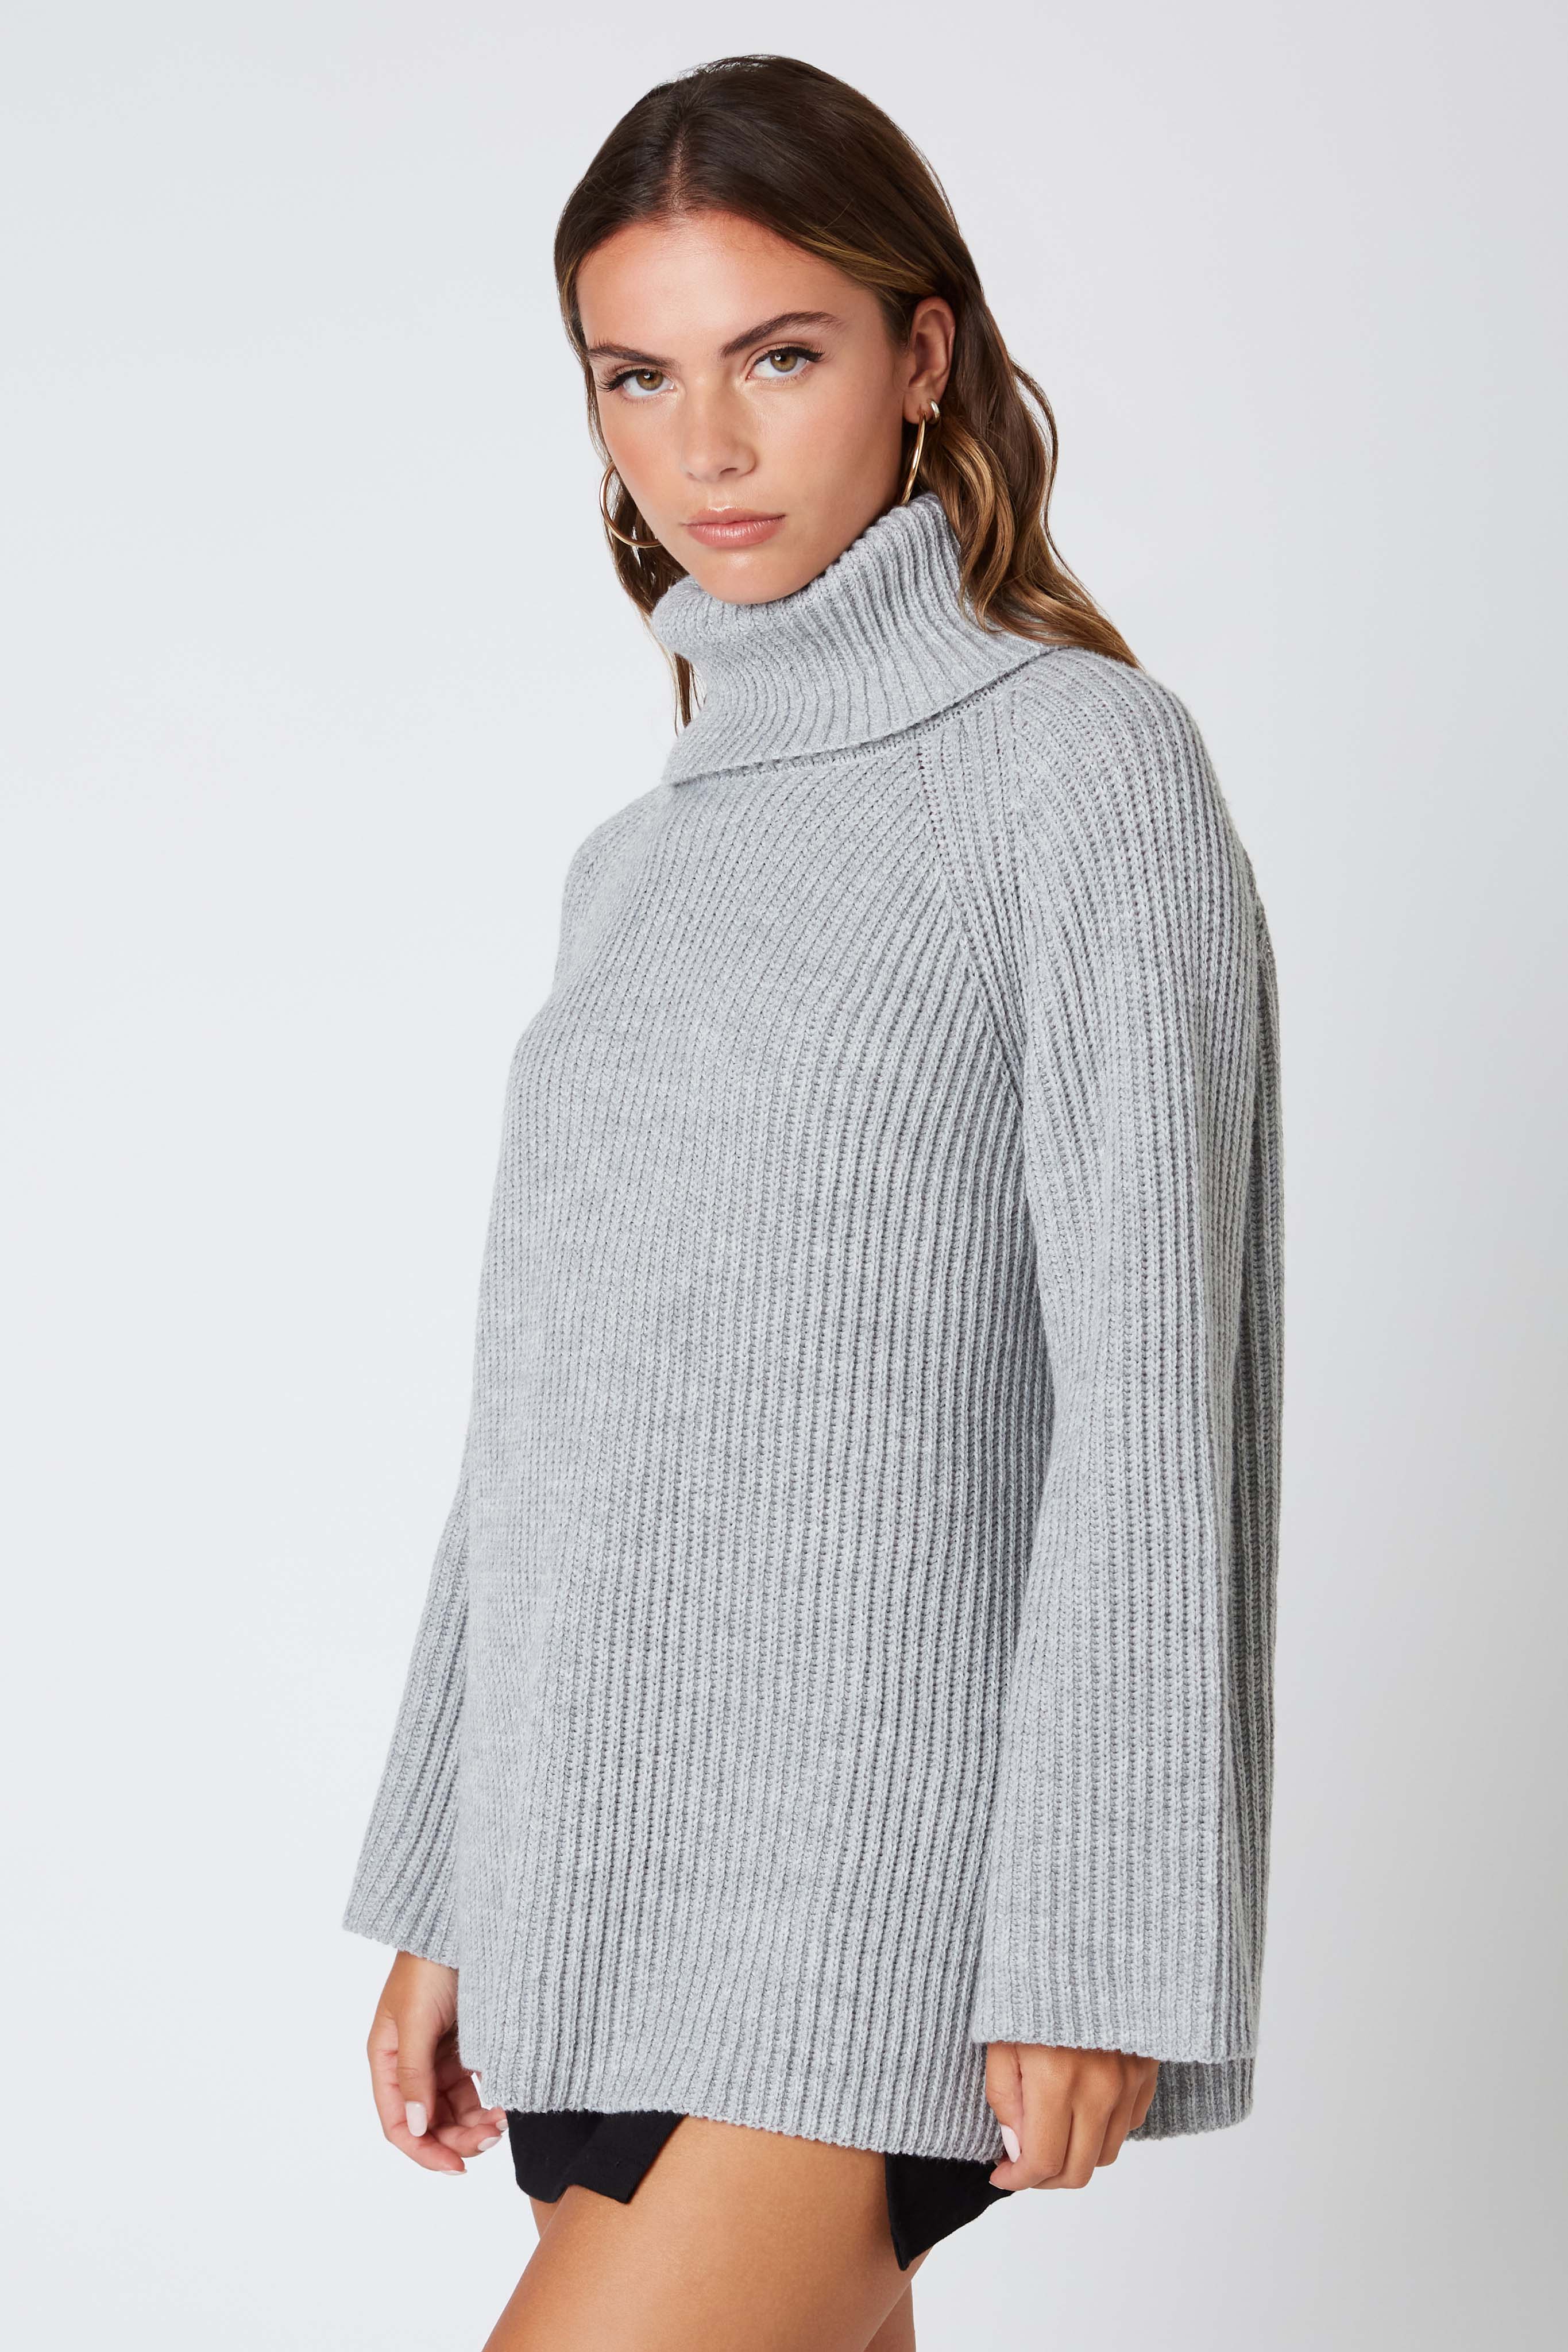 Oversized Turtleneck Sweater in Grey Side View